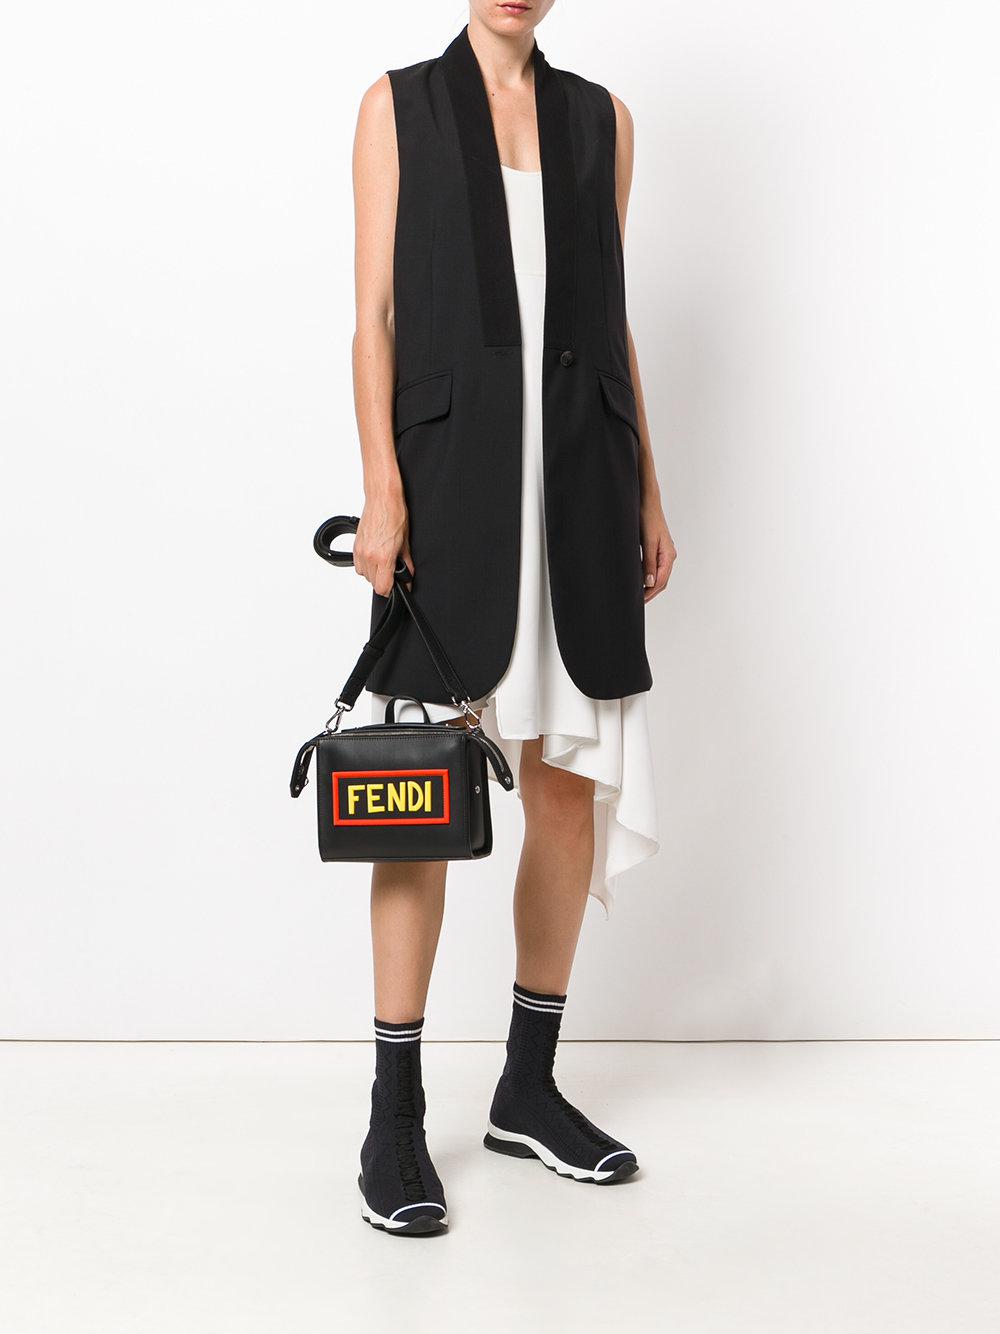 Fendi Leather Mini Lui Bag in Black - Lyst